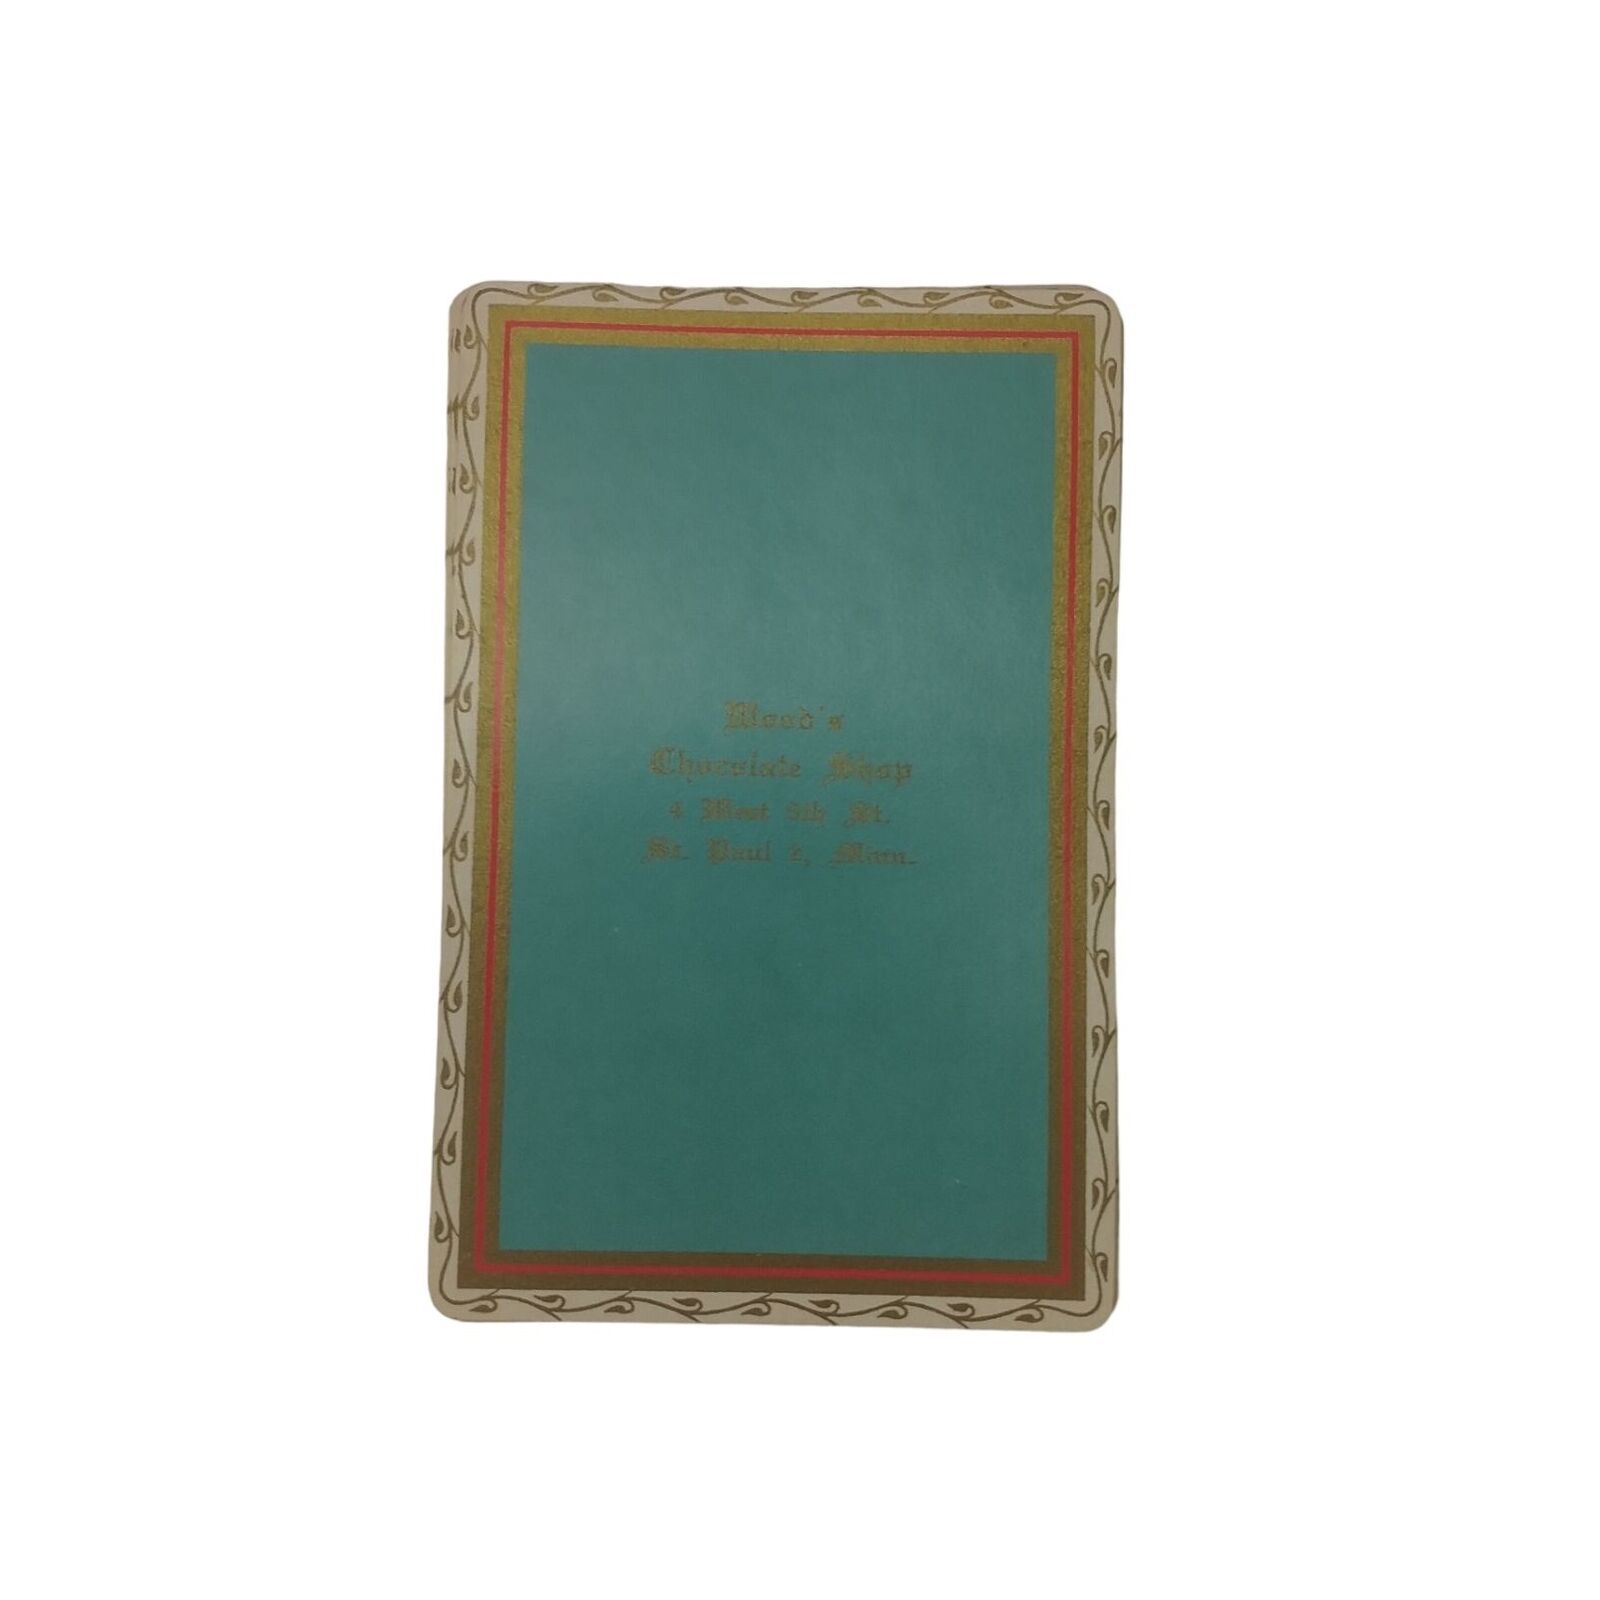 Brown & Bigelow Wood\'s Chocolate Shop Deck Of Playing Cards Vintage